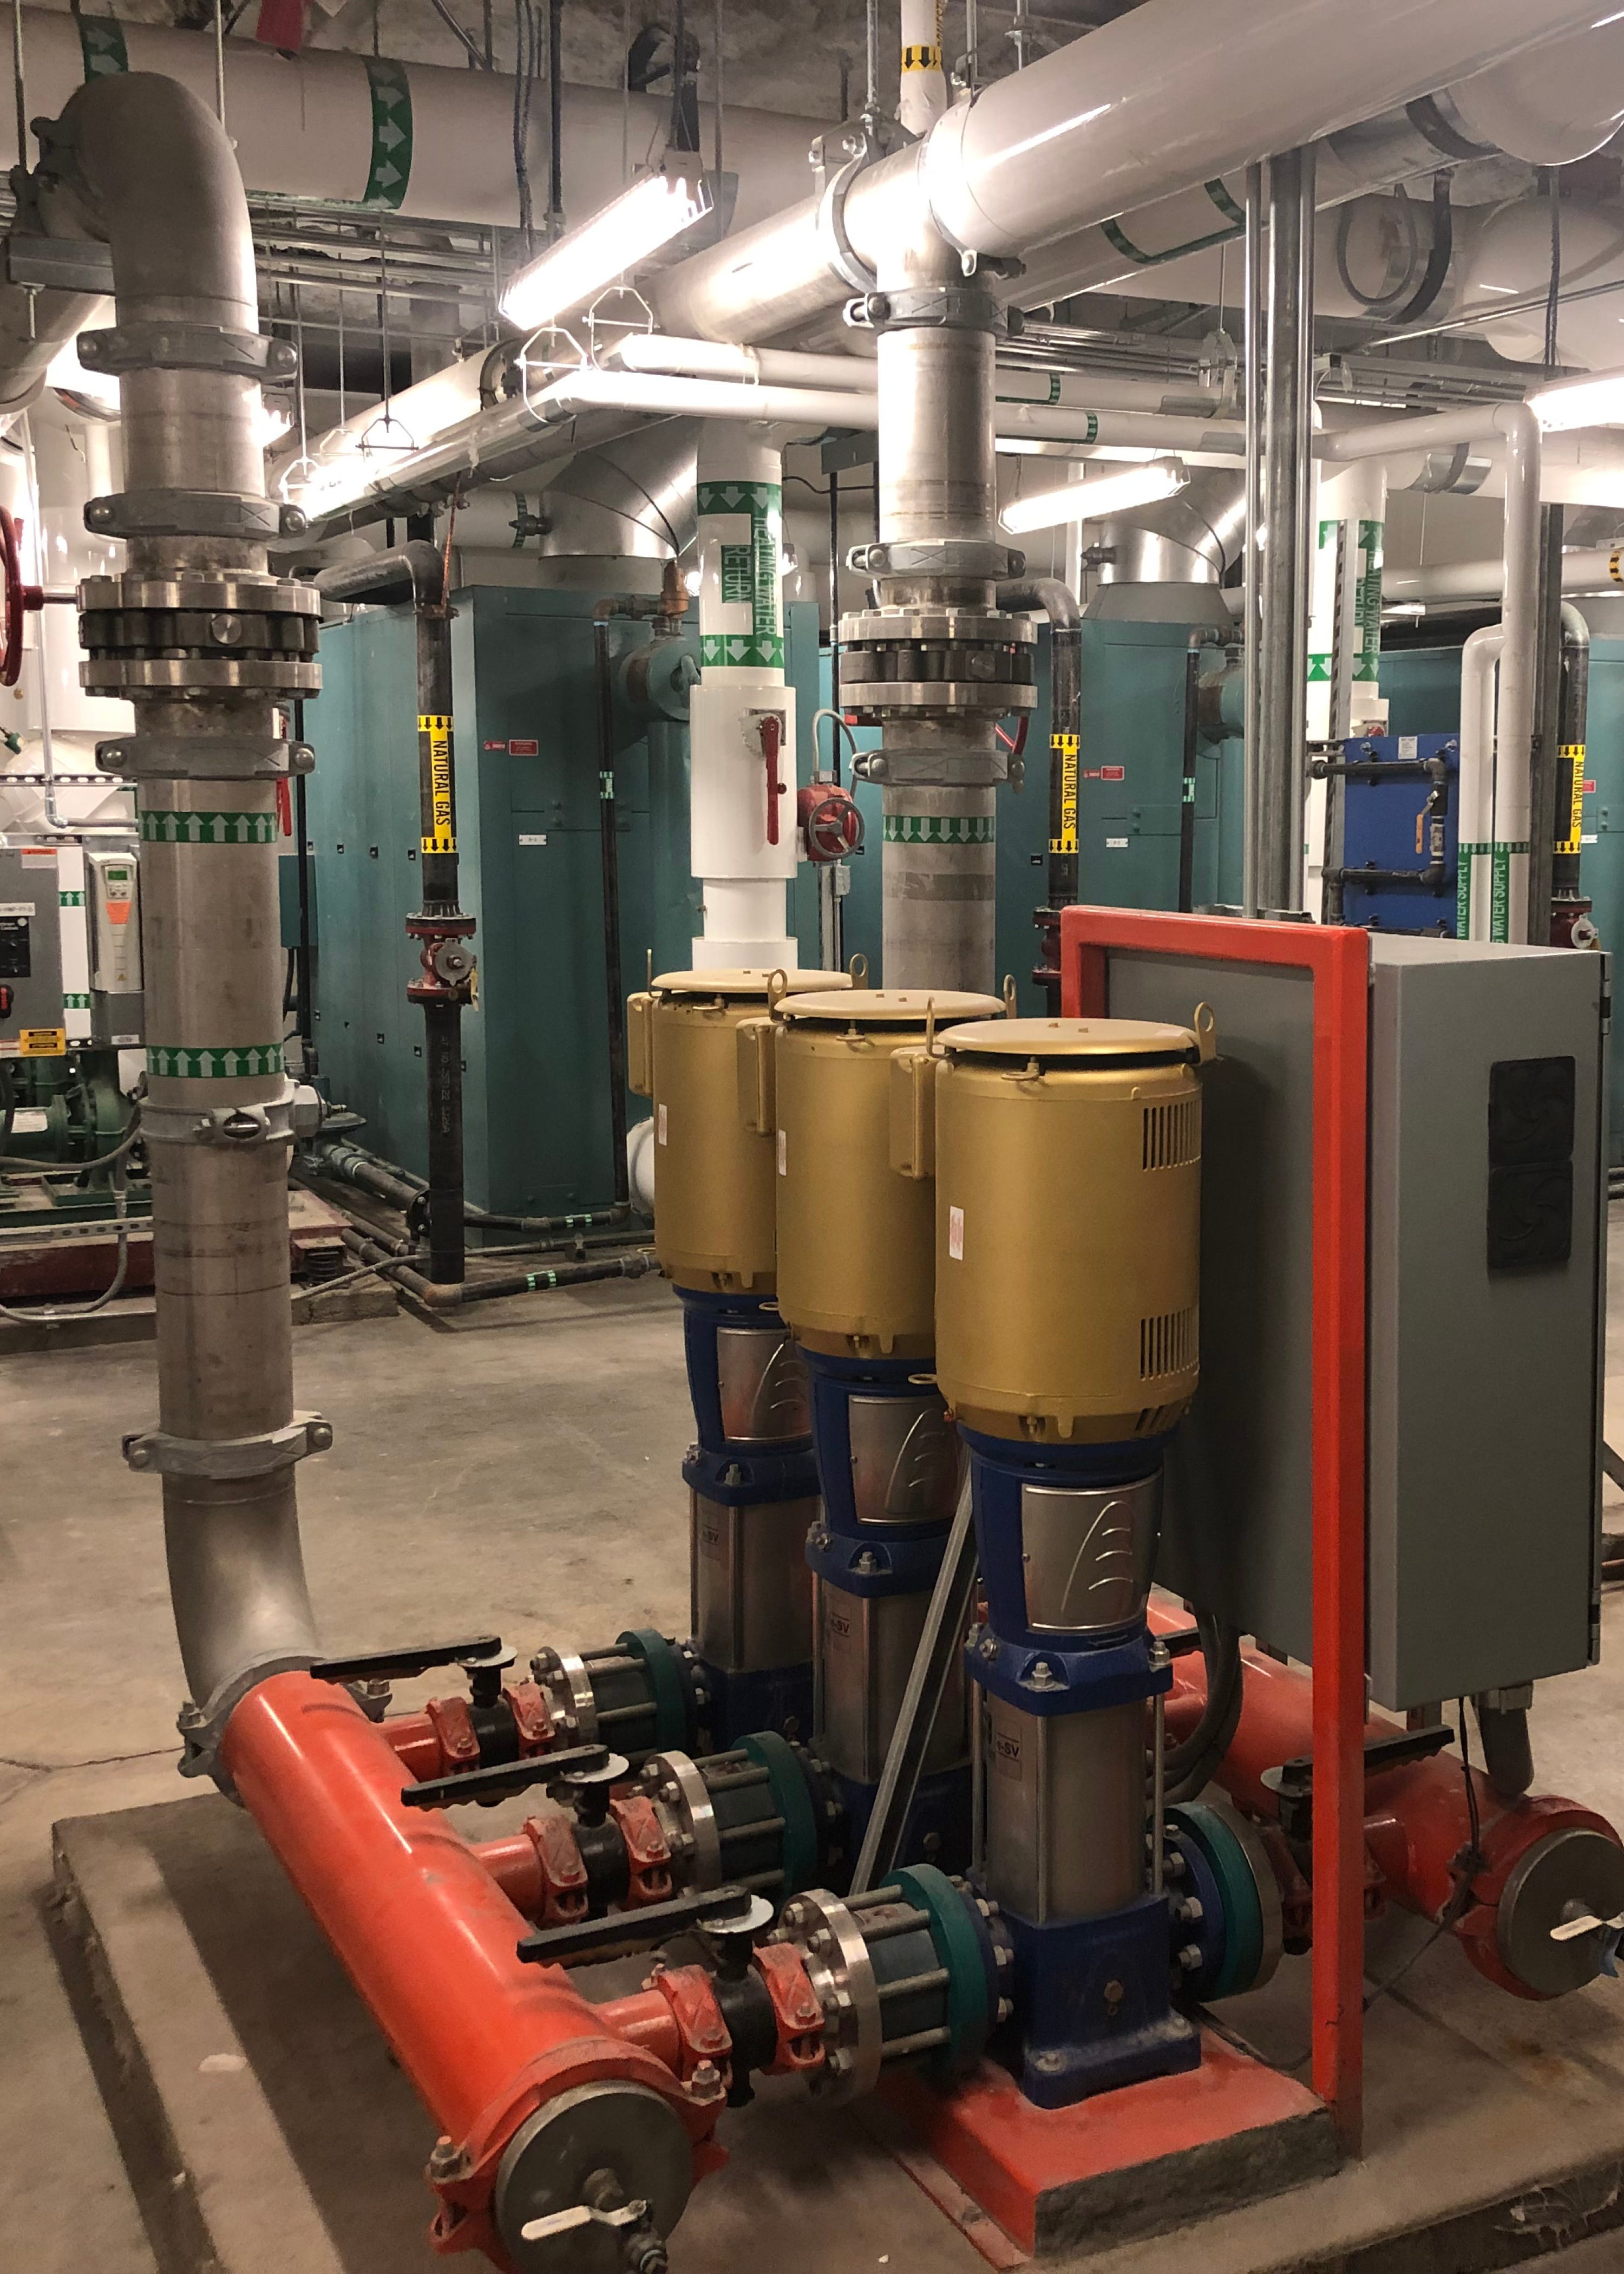 Hot Water Heater Replacements - Logan City Plumbing